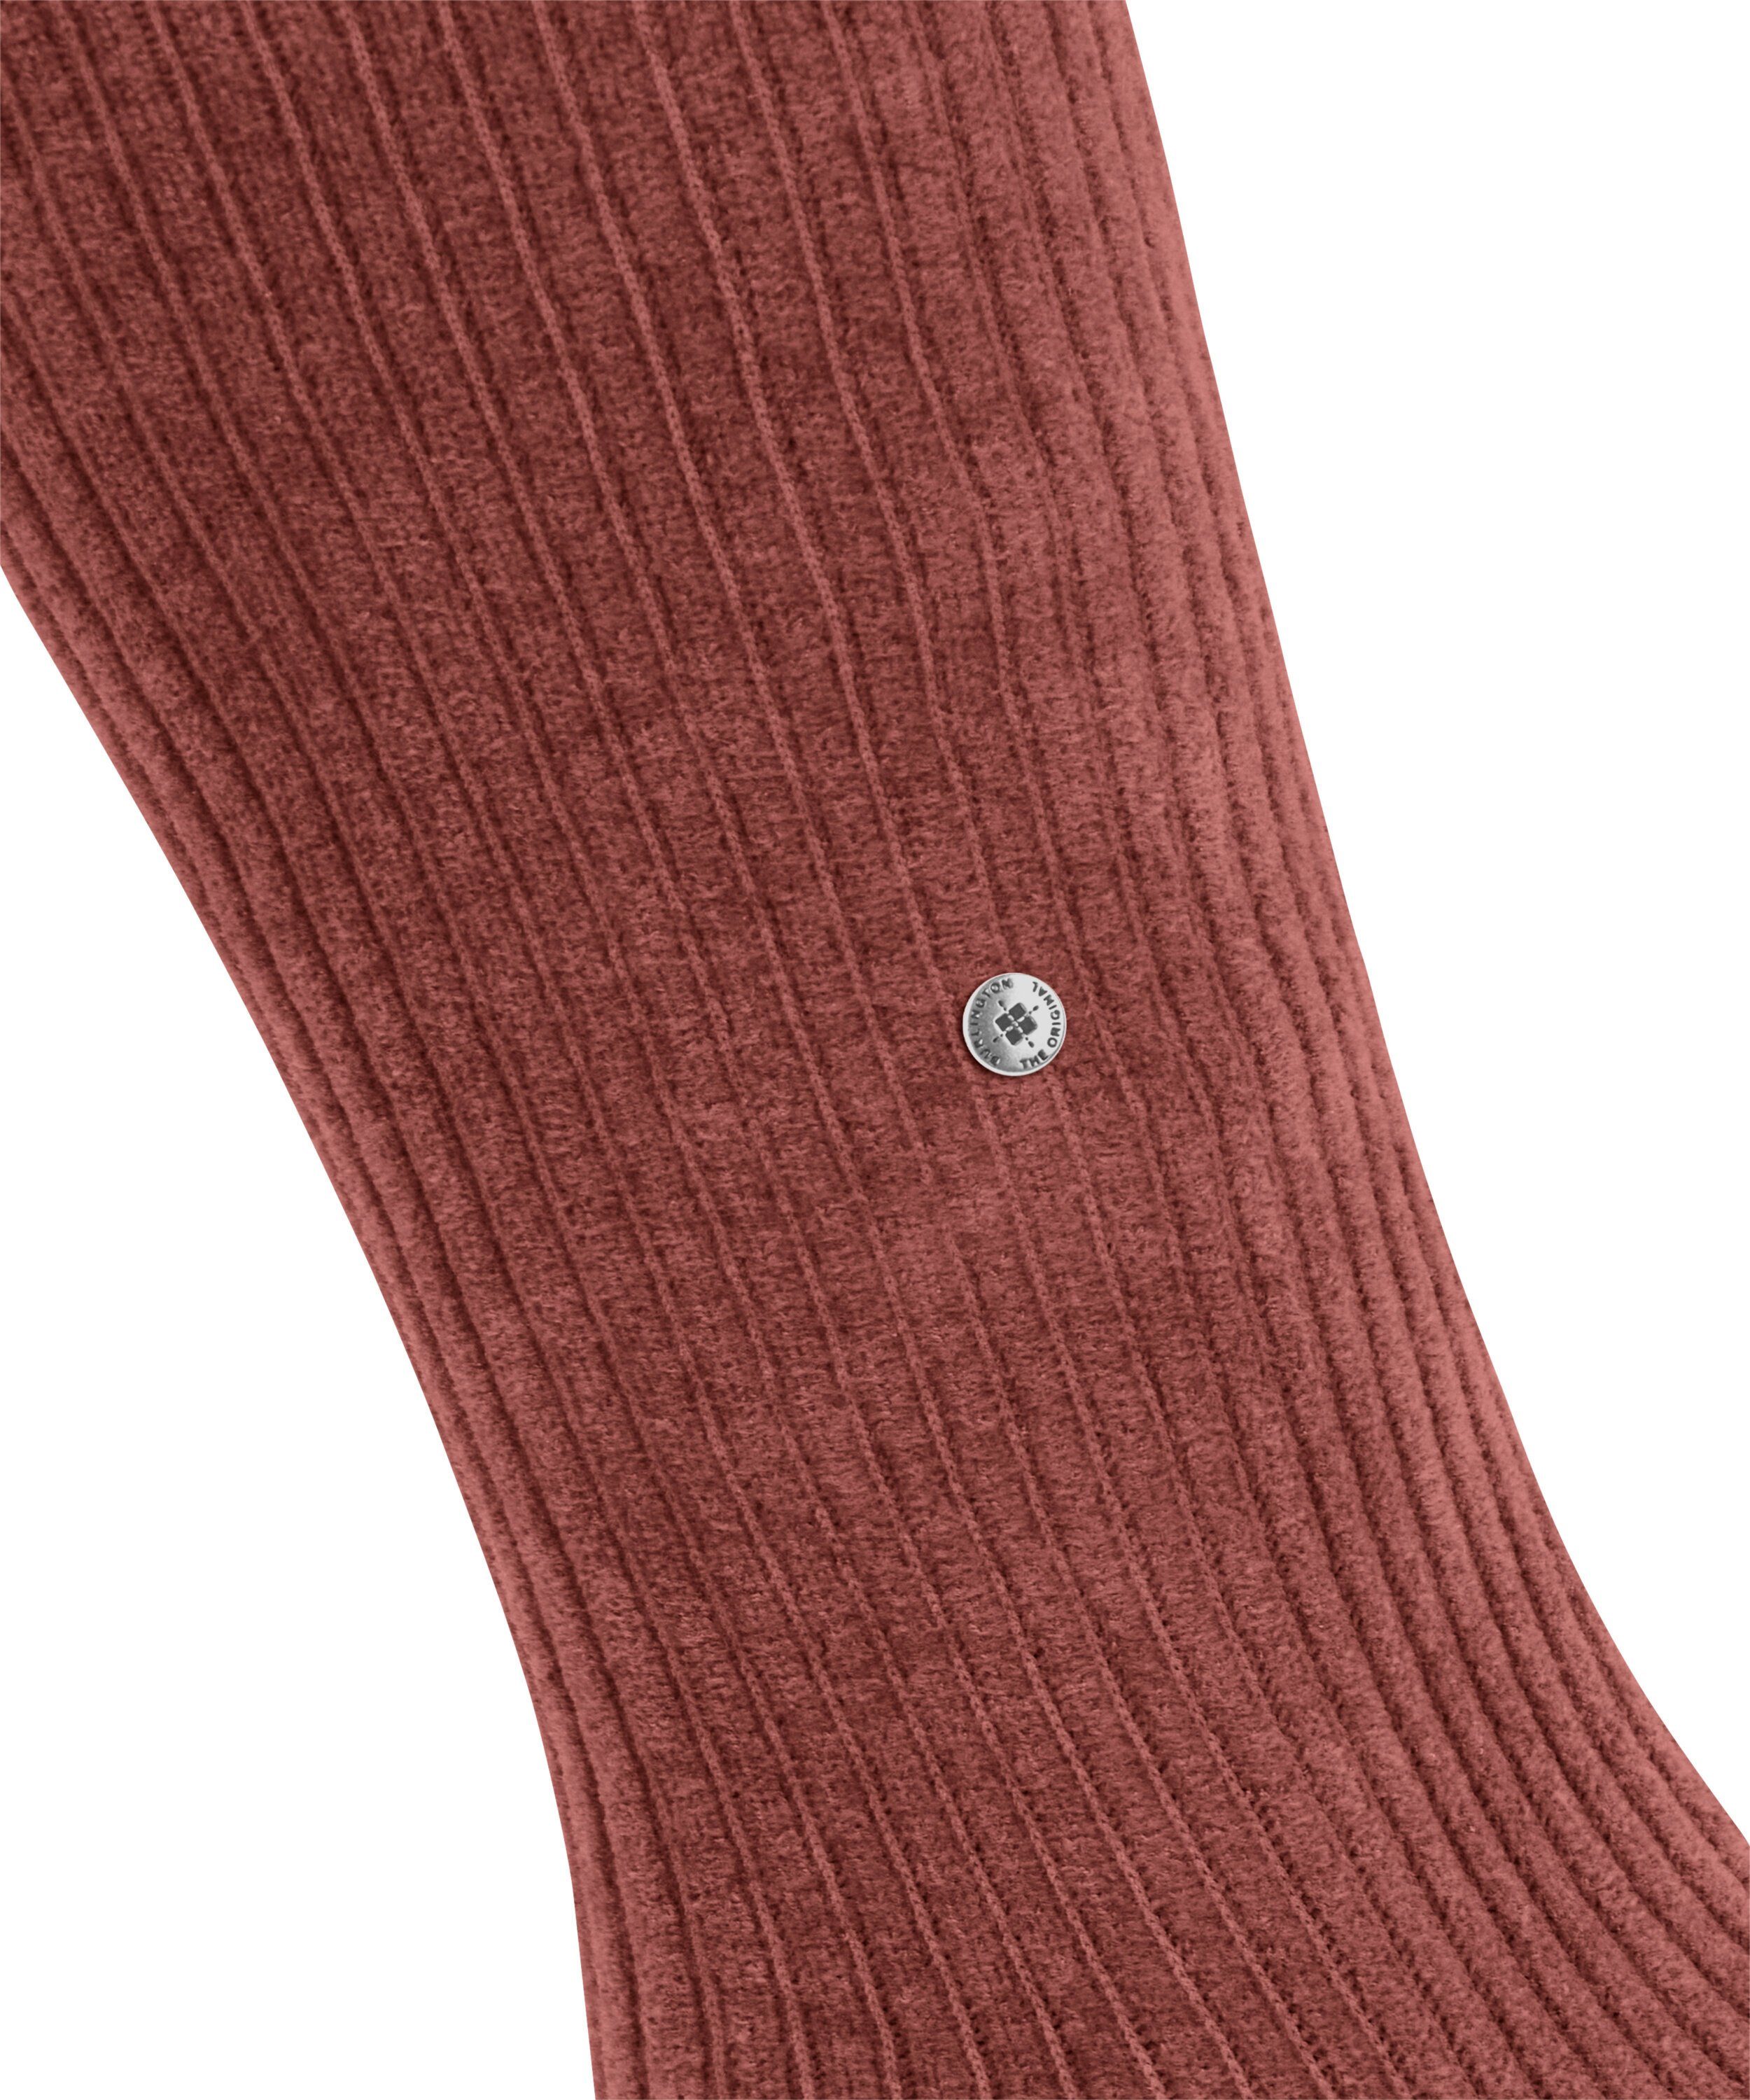 bean (1-Paar) Country Burlington Socken (5772) Cord